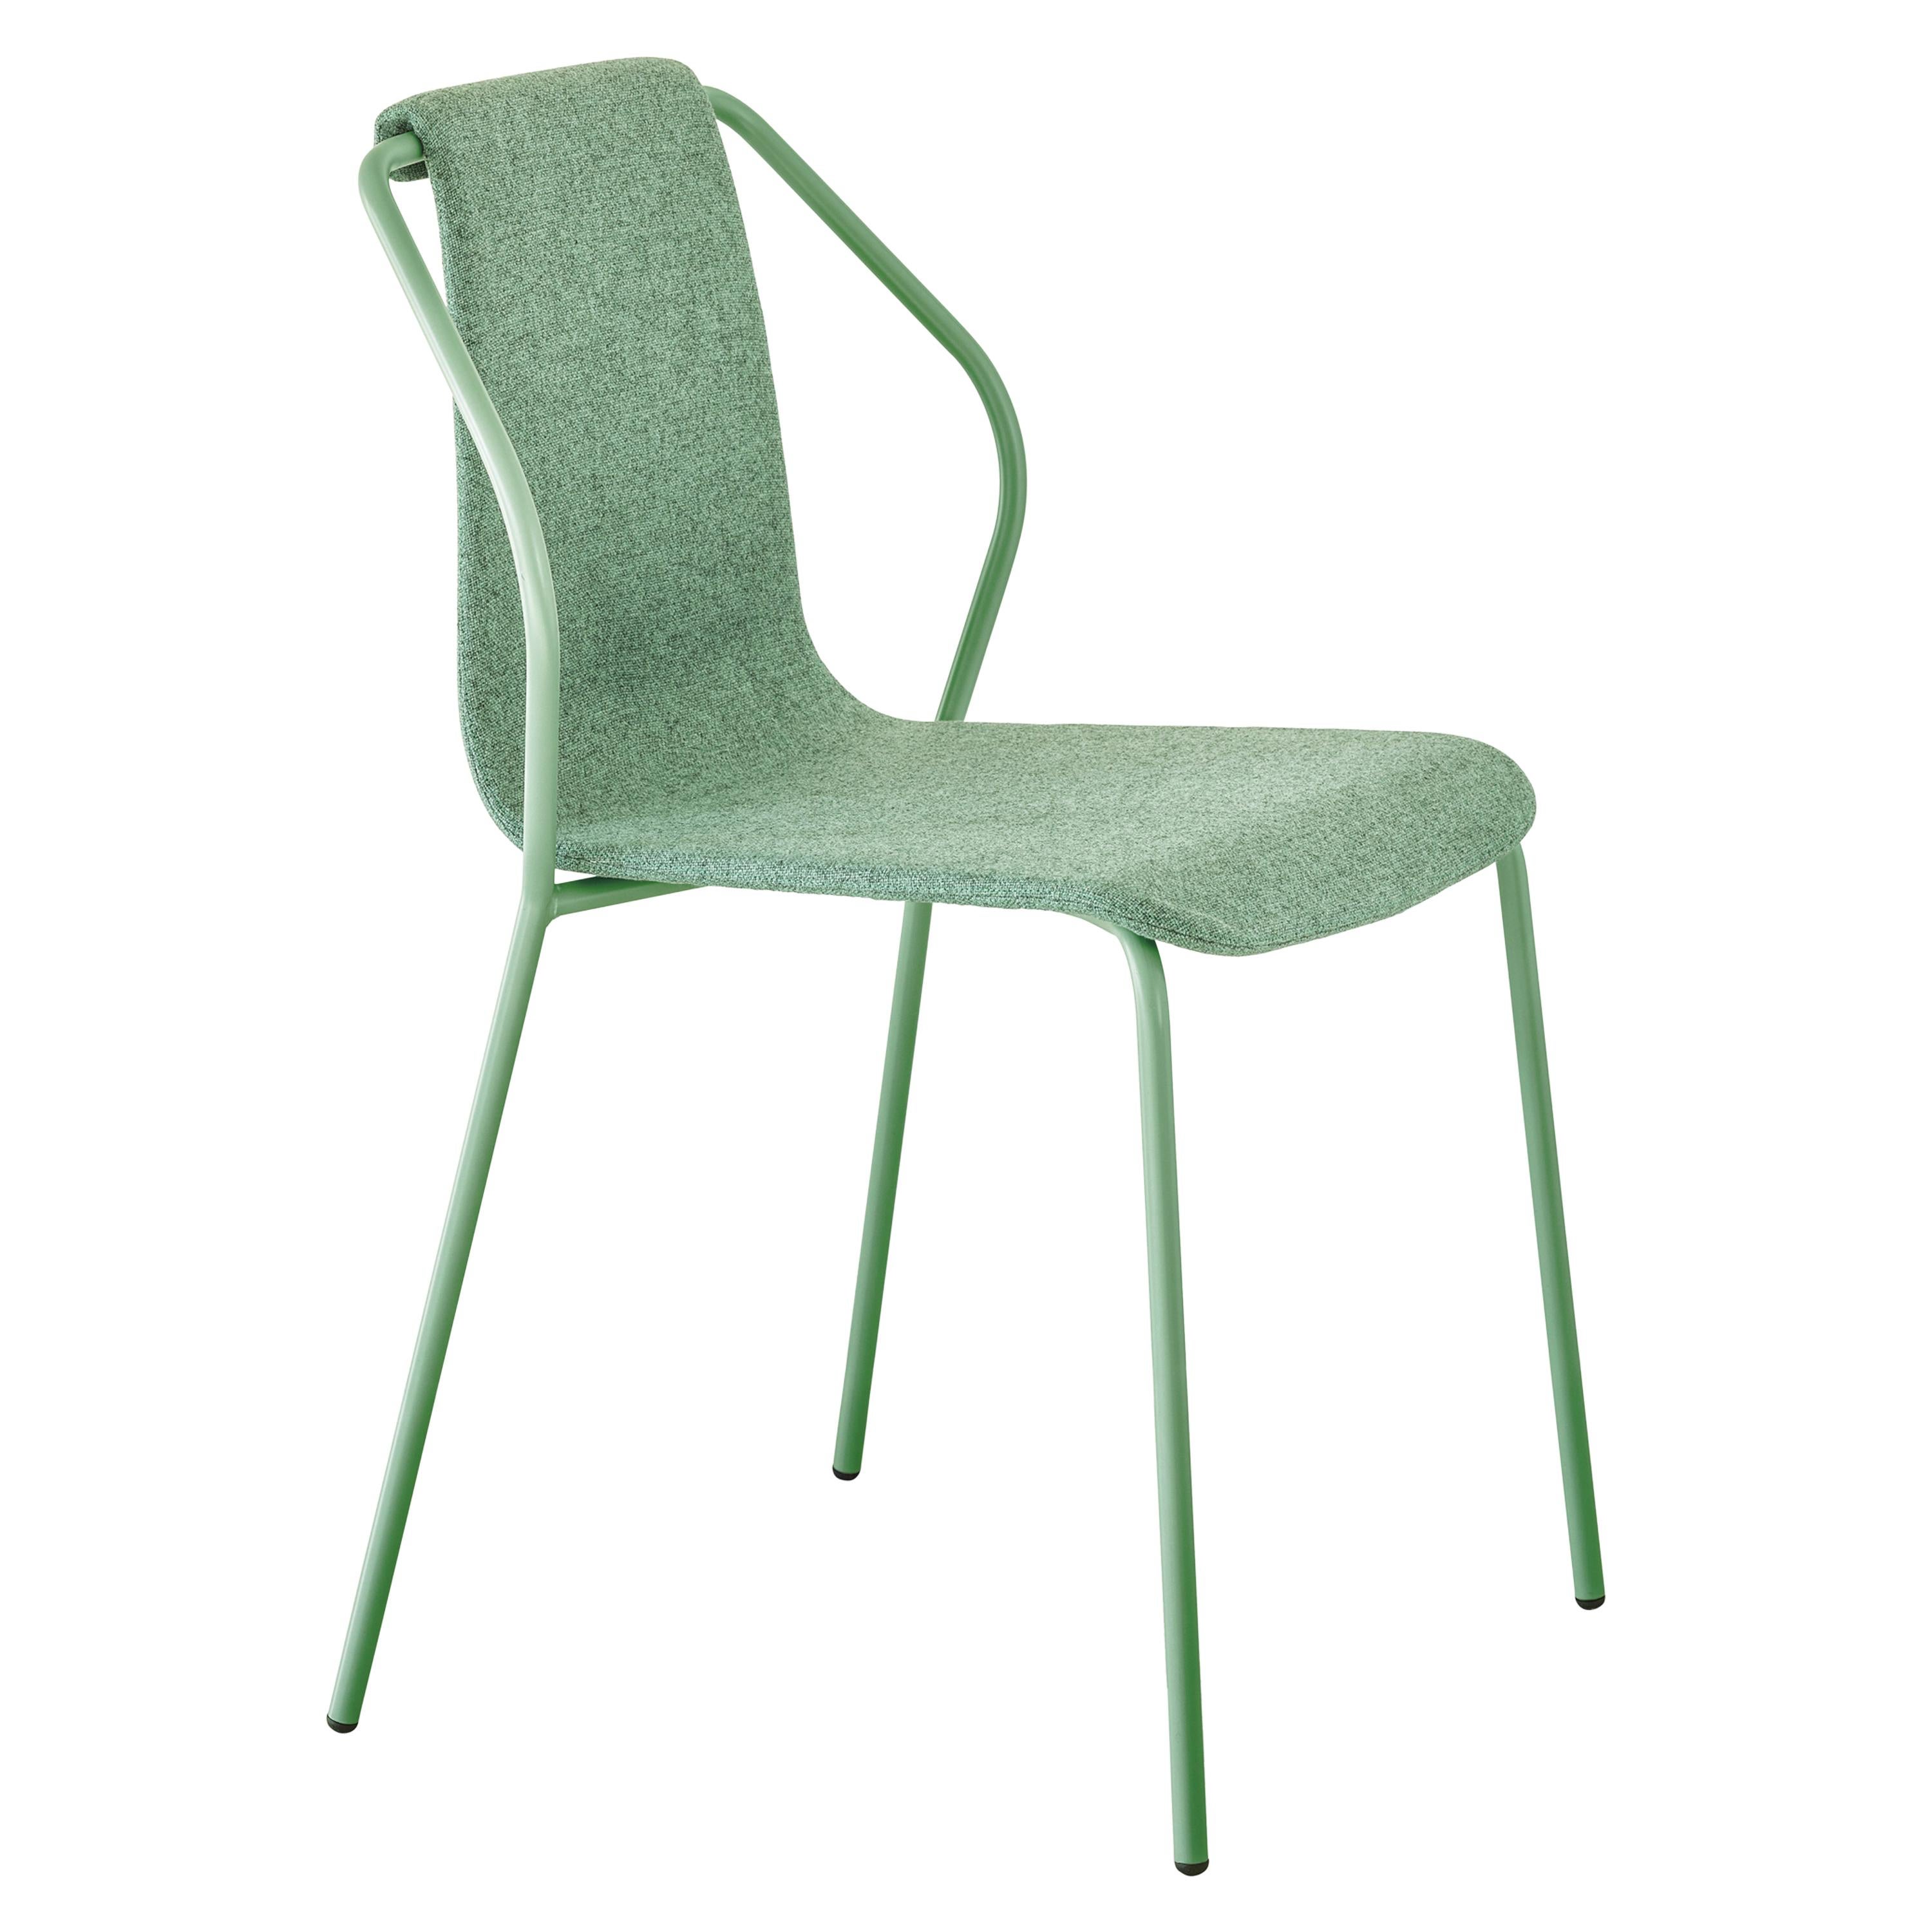 Baleri Italia Donna Indoor Chair in Green Fabric by Studio Irvine For Sale